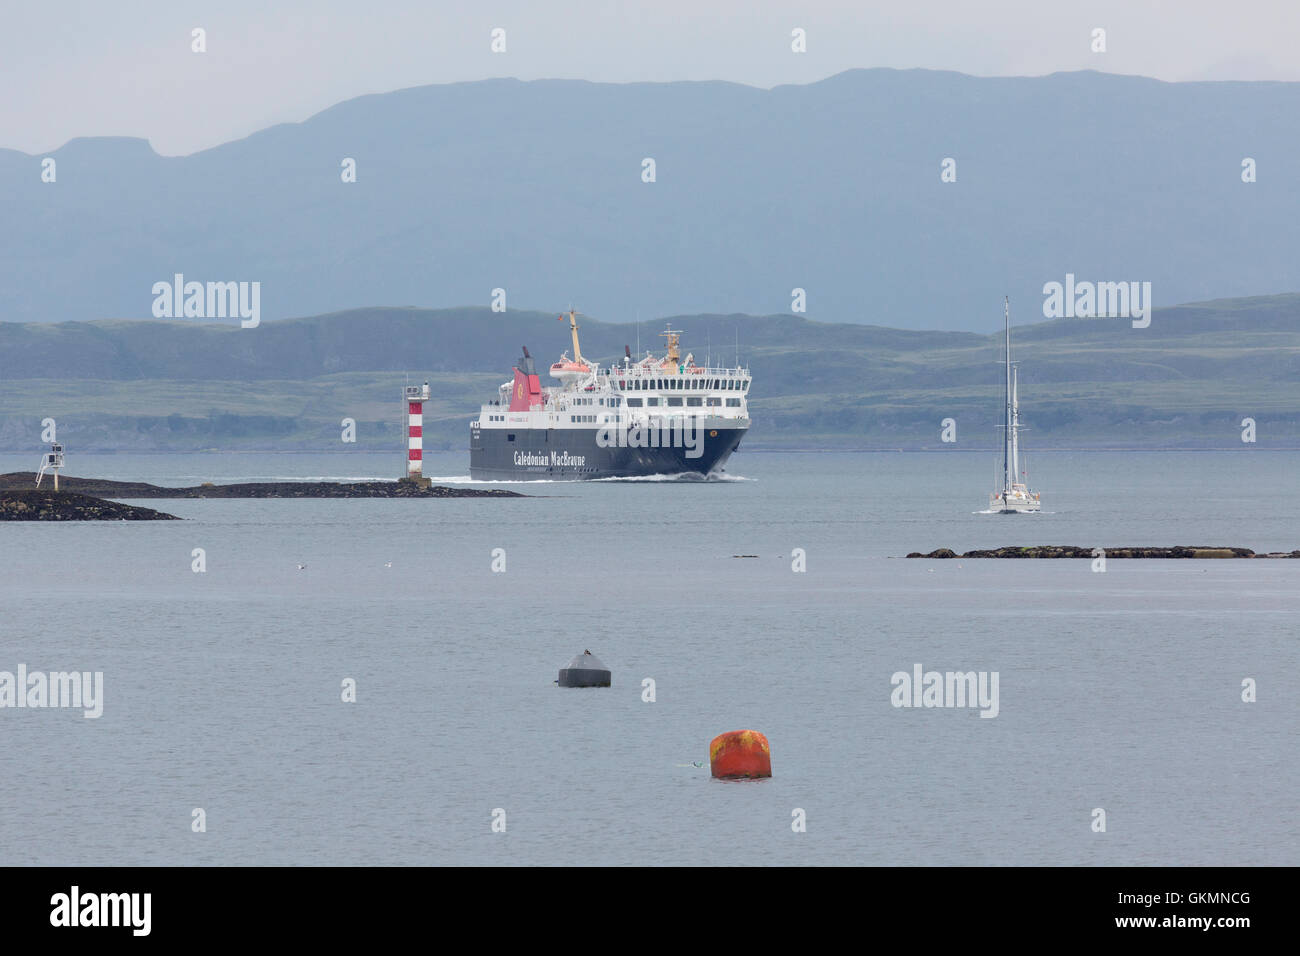 Isle of Mull, Tiree, Coll und Barra aus Oban betreibt Caledonian MacBrayne. Stockfoto